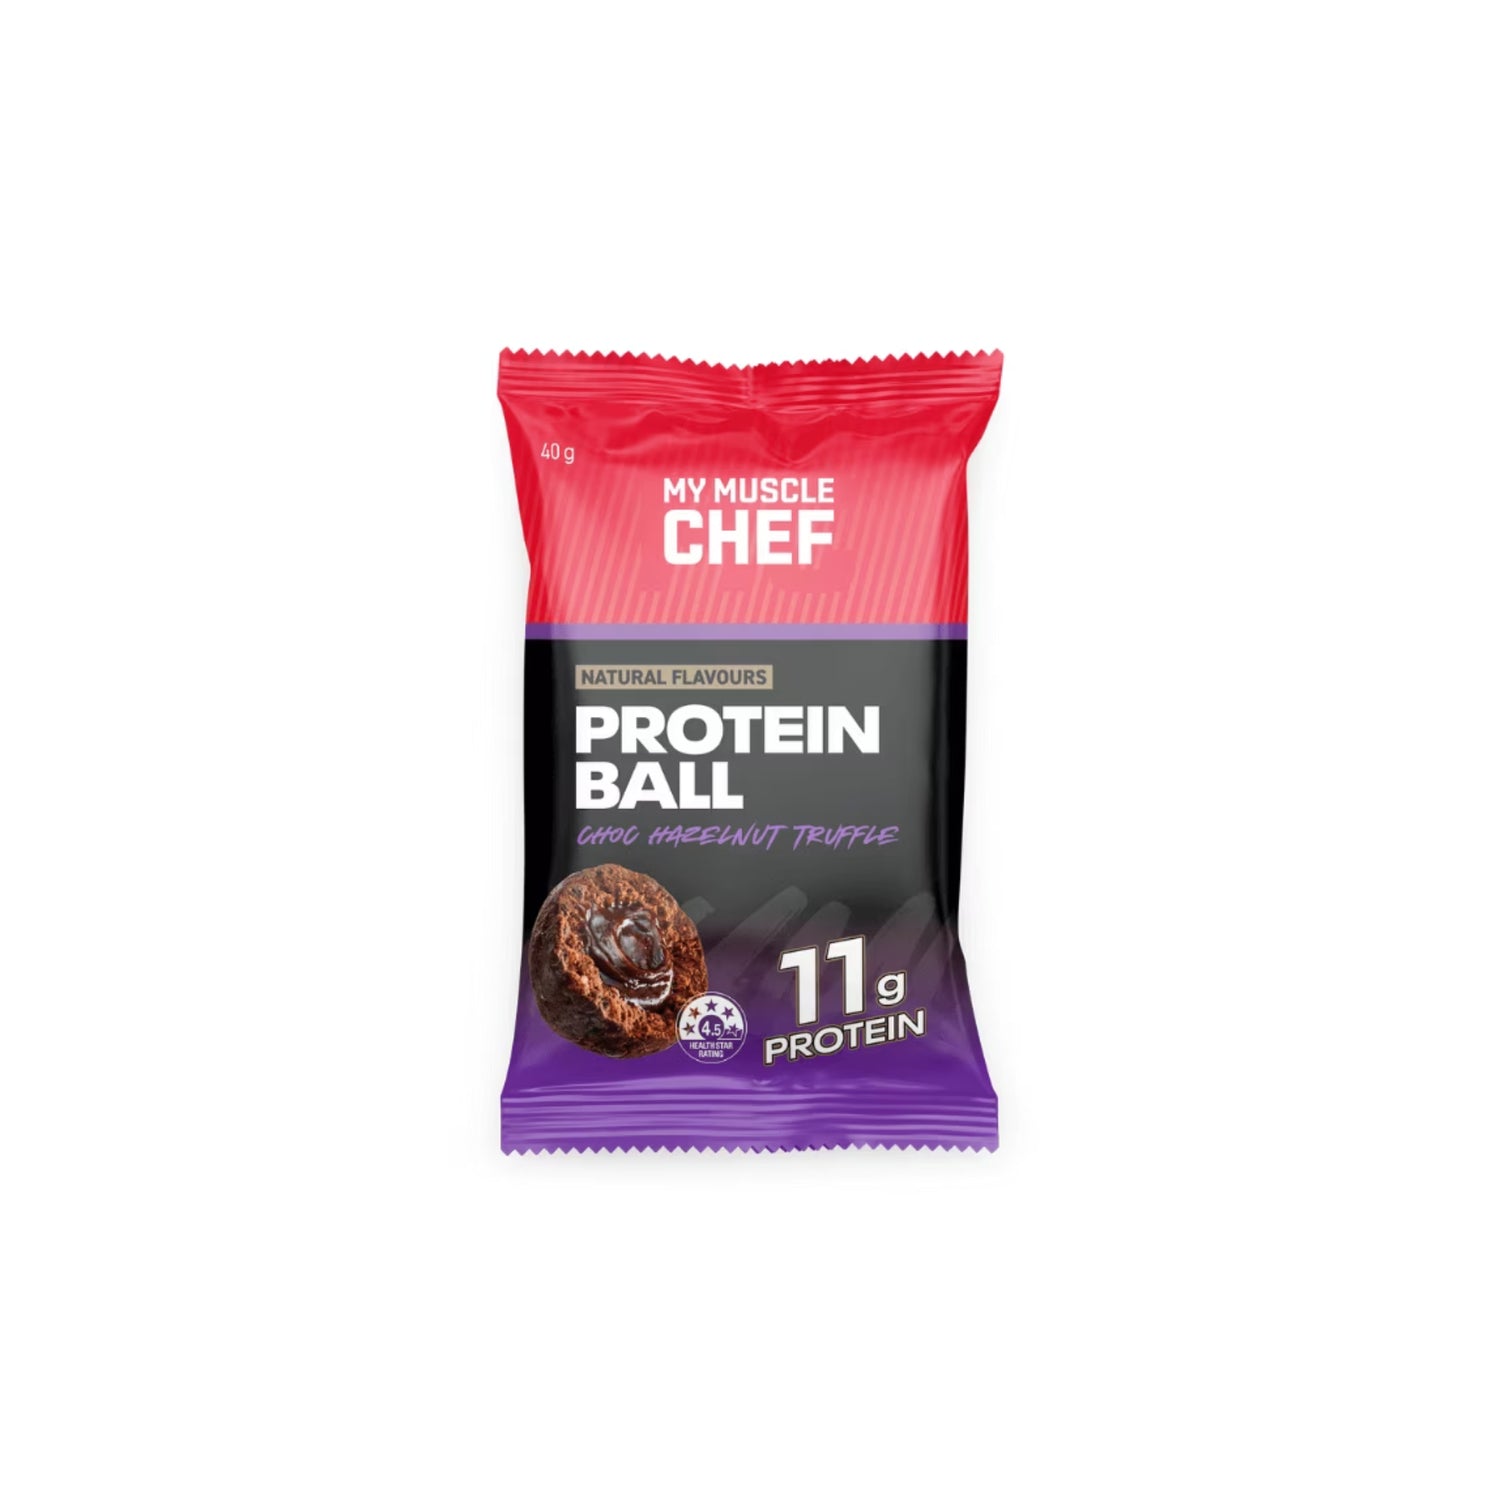 My Muscle Chef Protein Ball - Choc Hazelnut Truffle